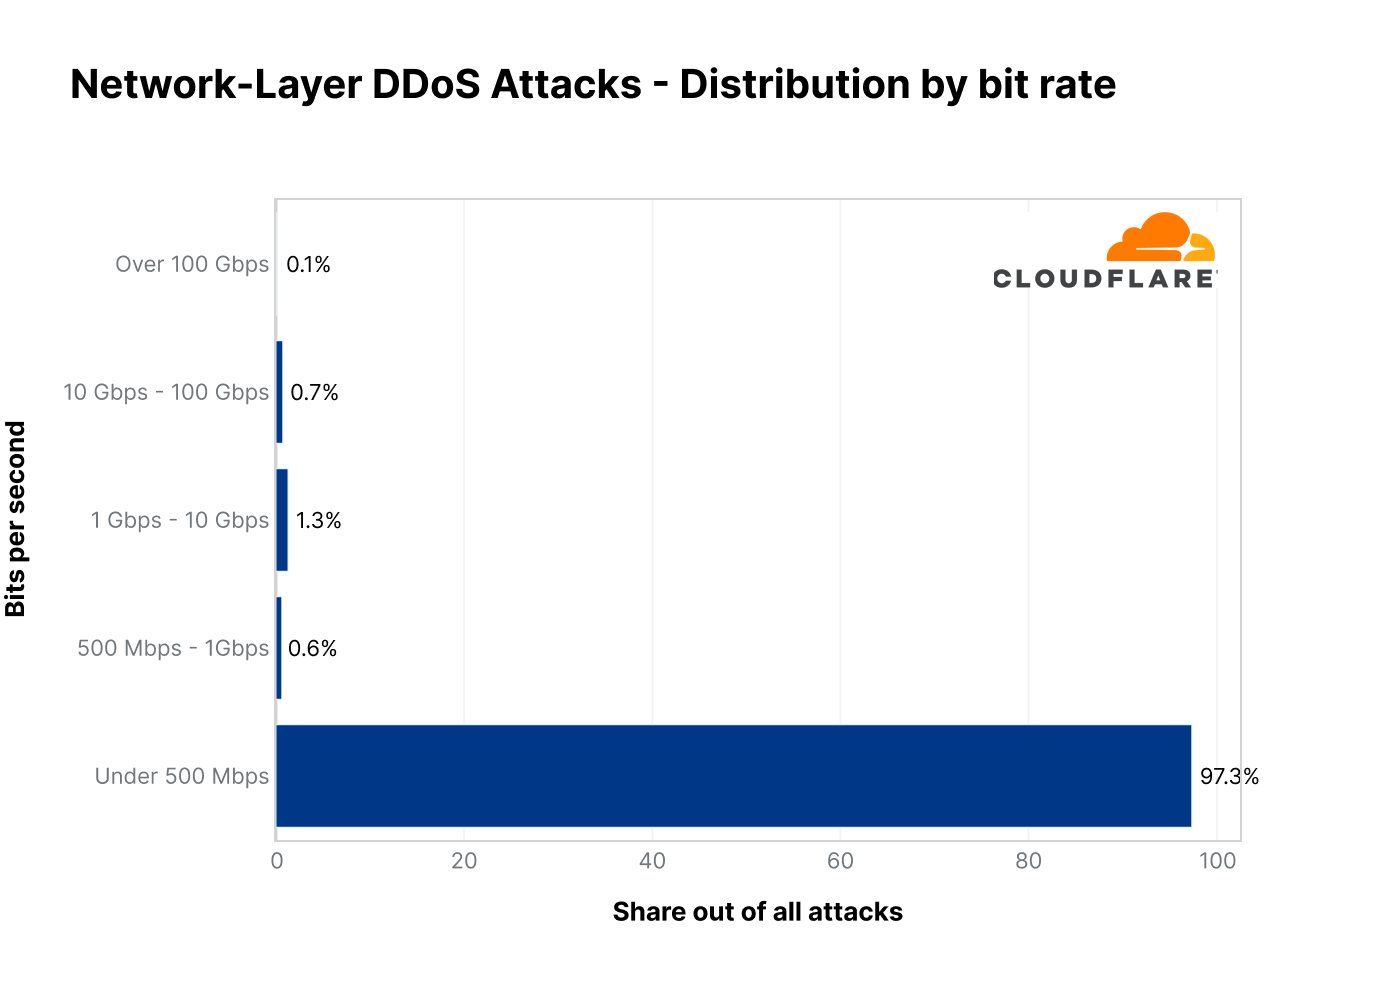 Battle.net DDoS Attack Causing High Latency and Login Queues - Wowhead News